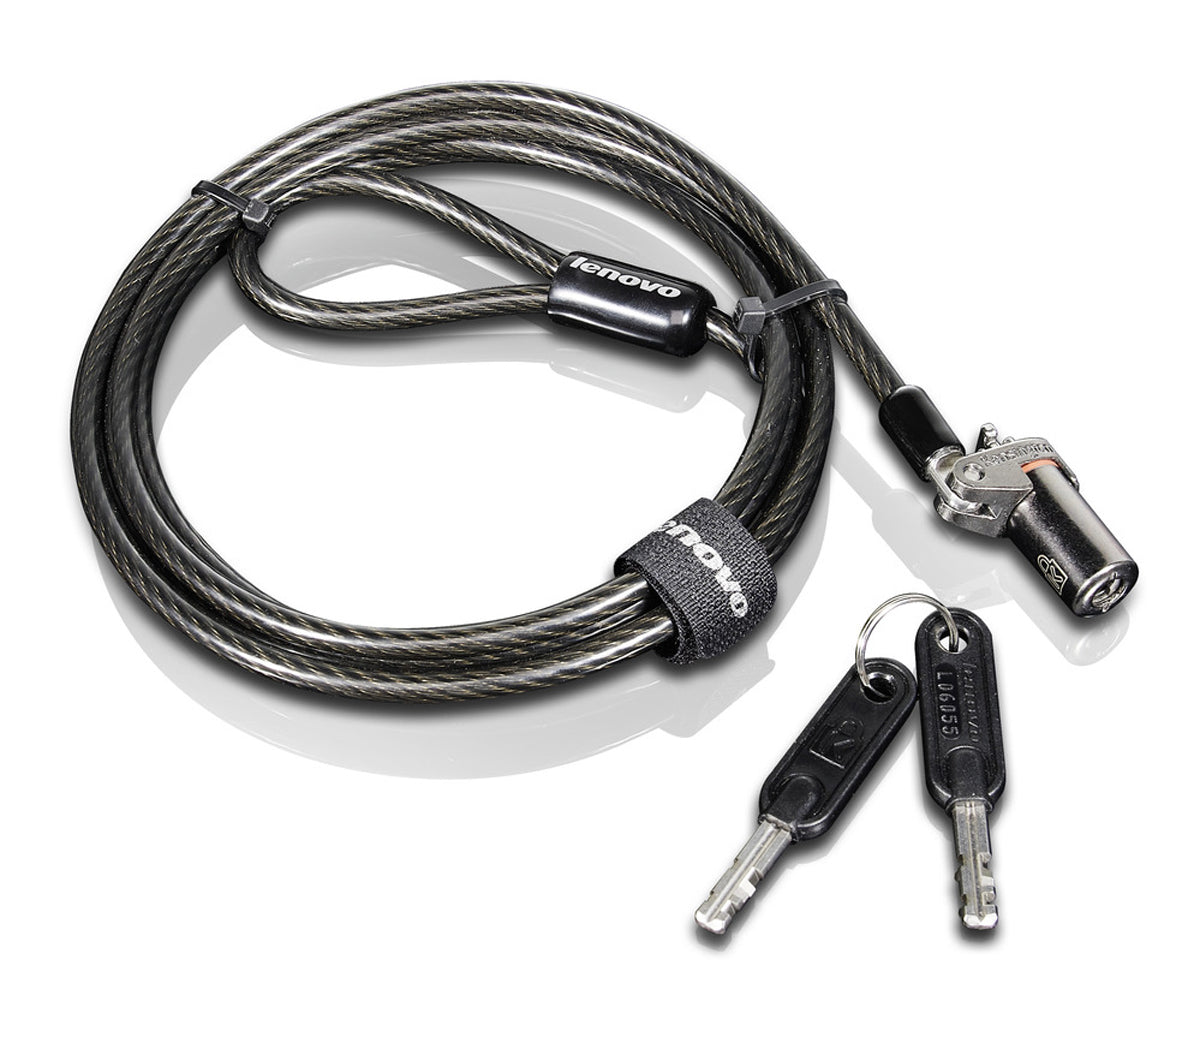 Lenovo 0B47388 cable lock Black, Charcoal 1.5 m